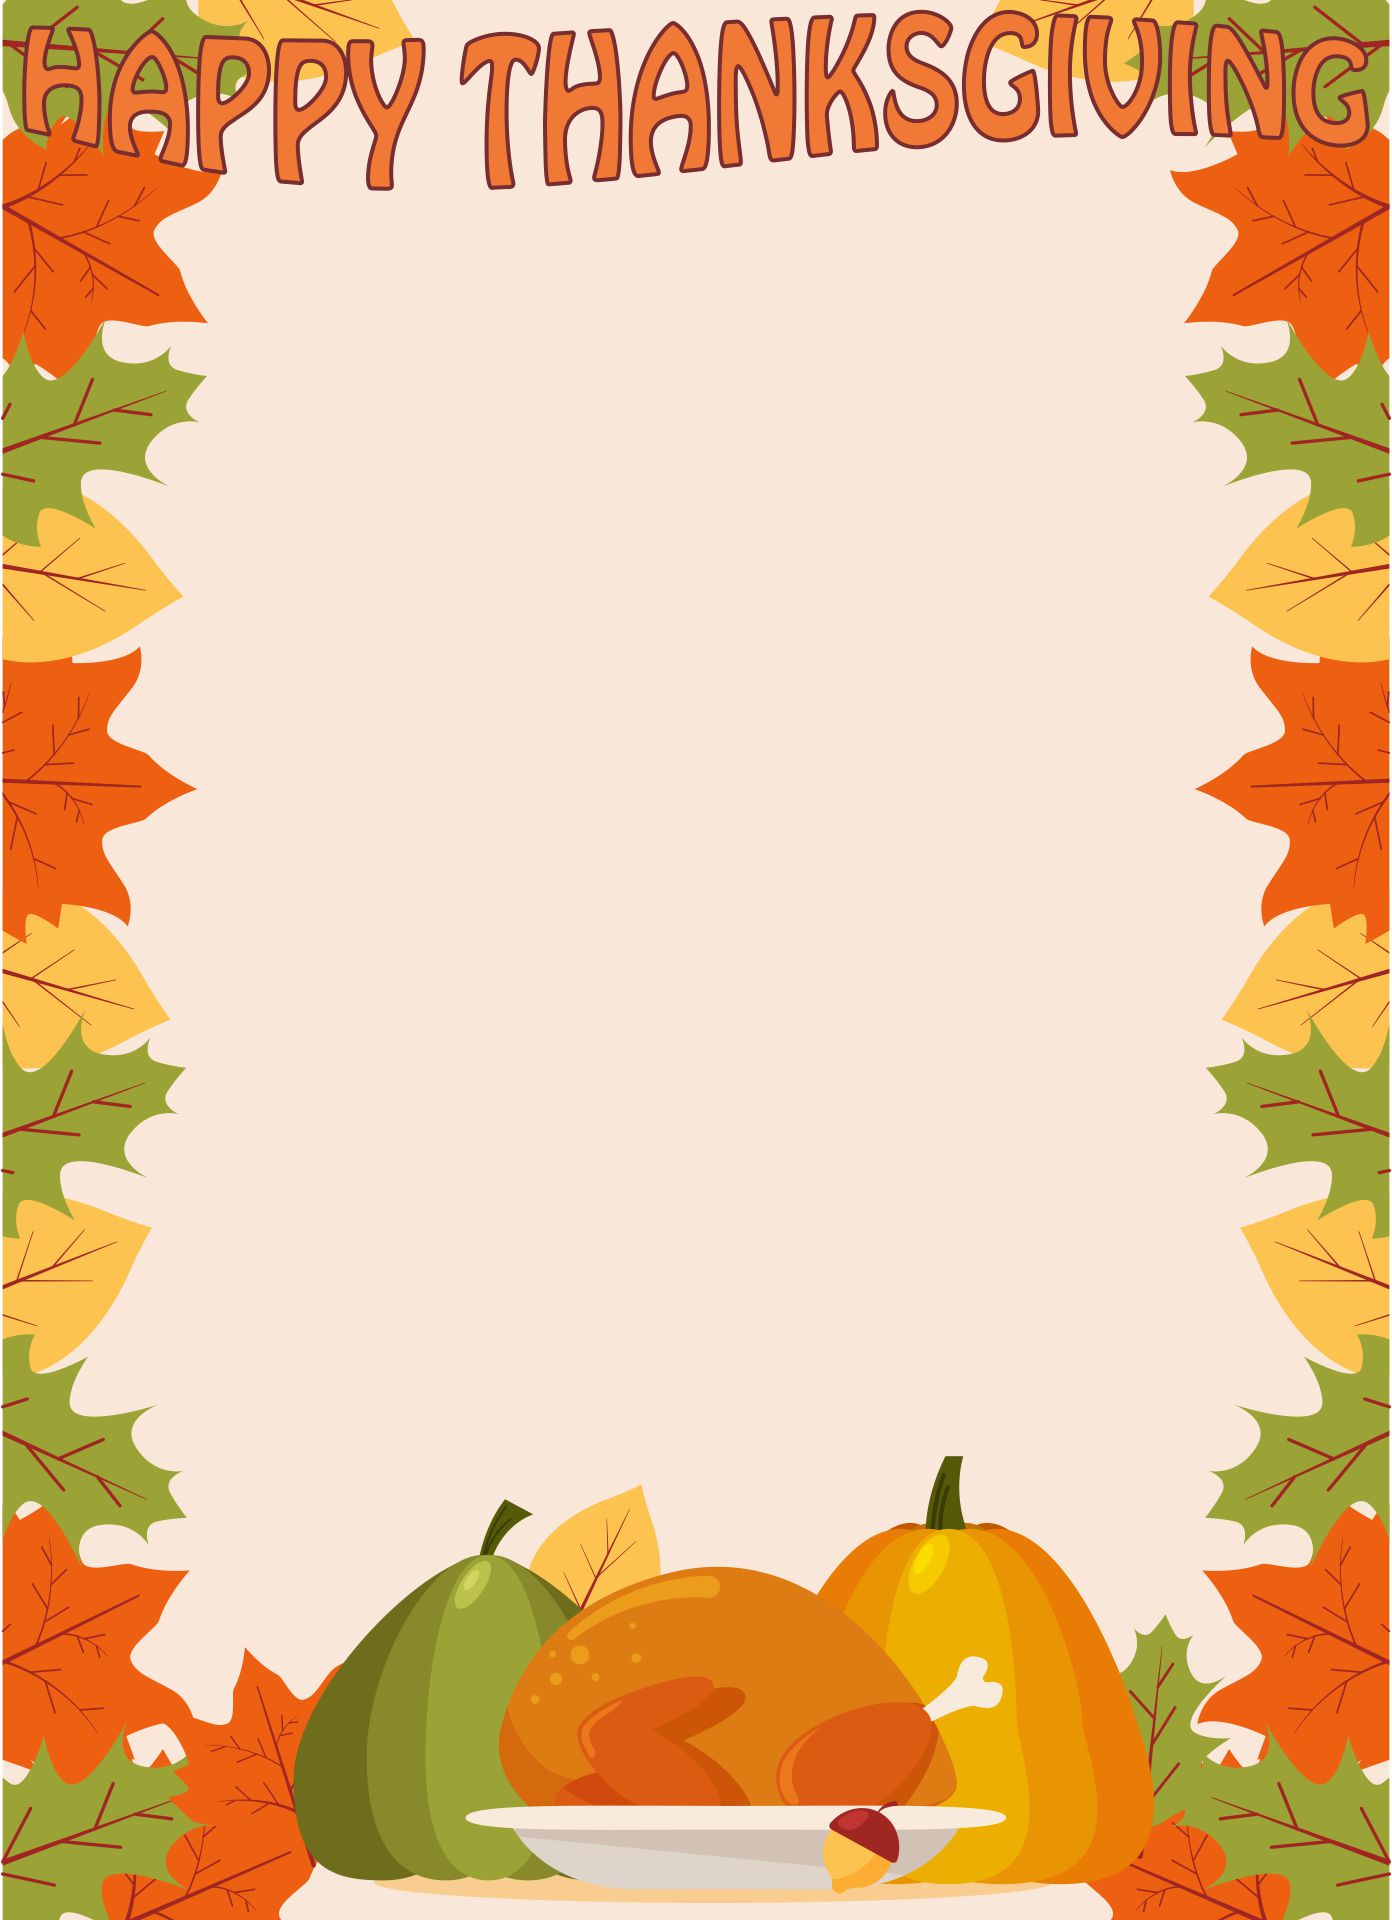 Happy Thanksgiving Border Clip Art